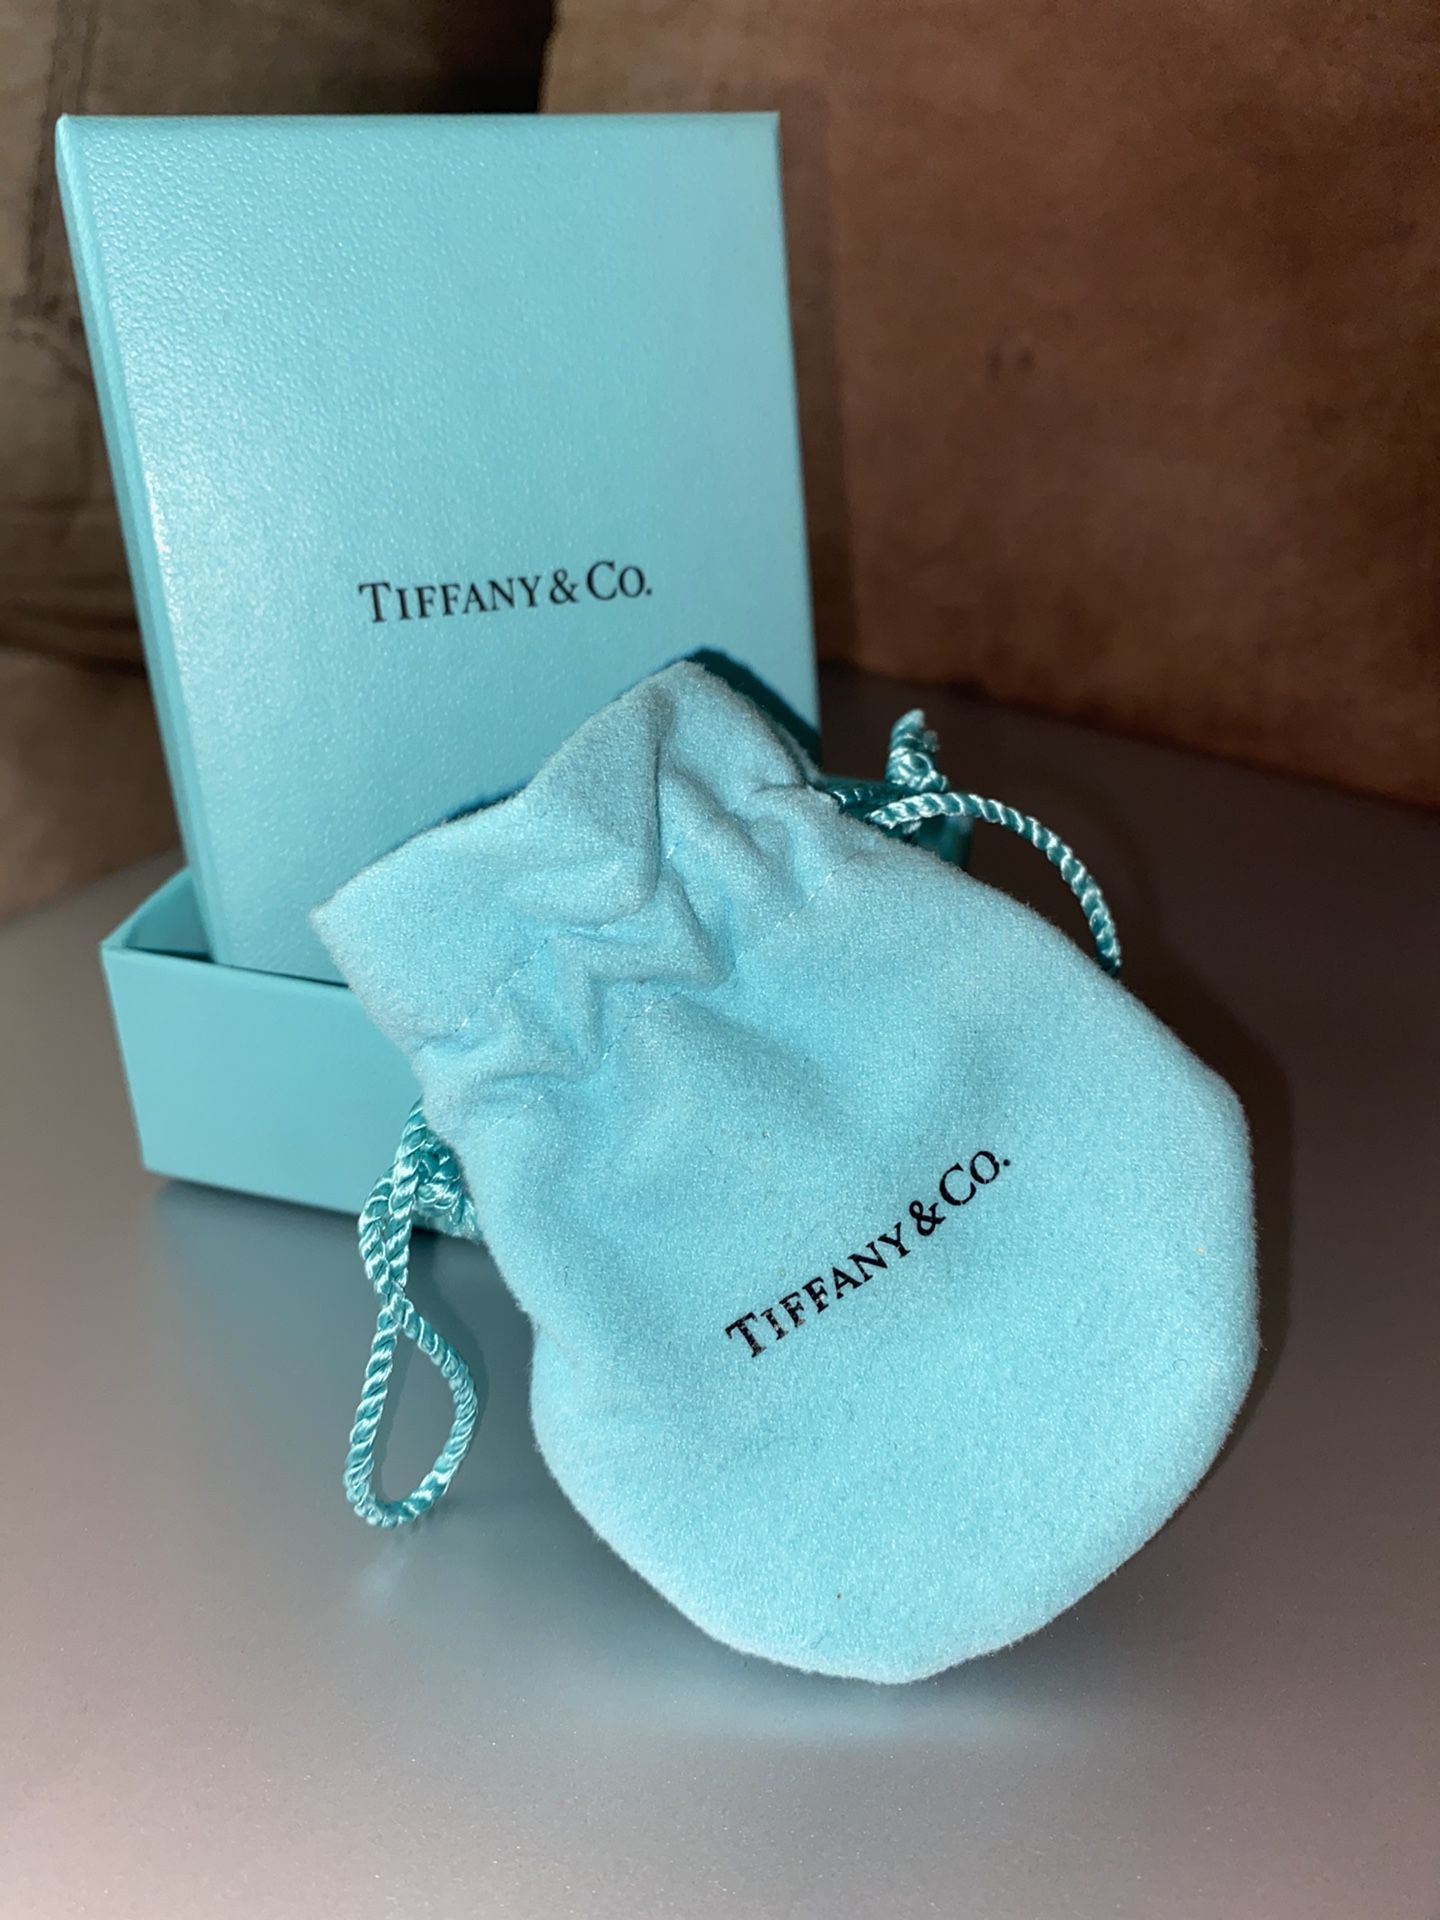 Tiffany & Co Box & Bag (for Gift )